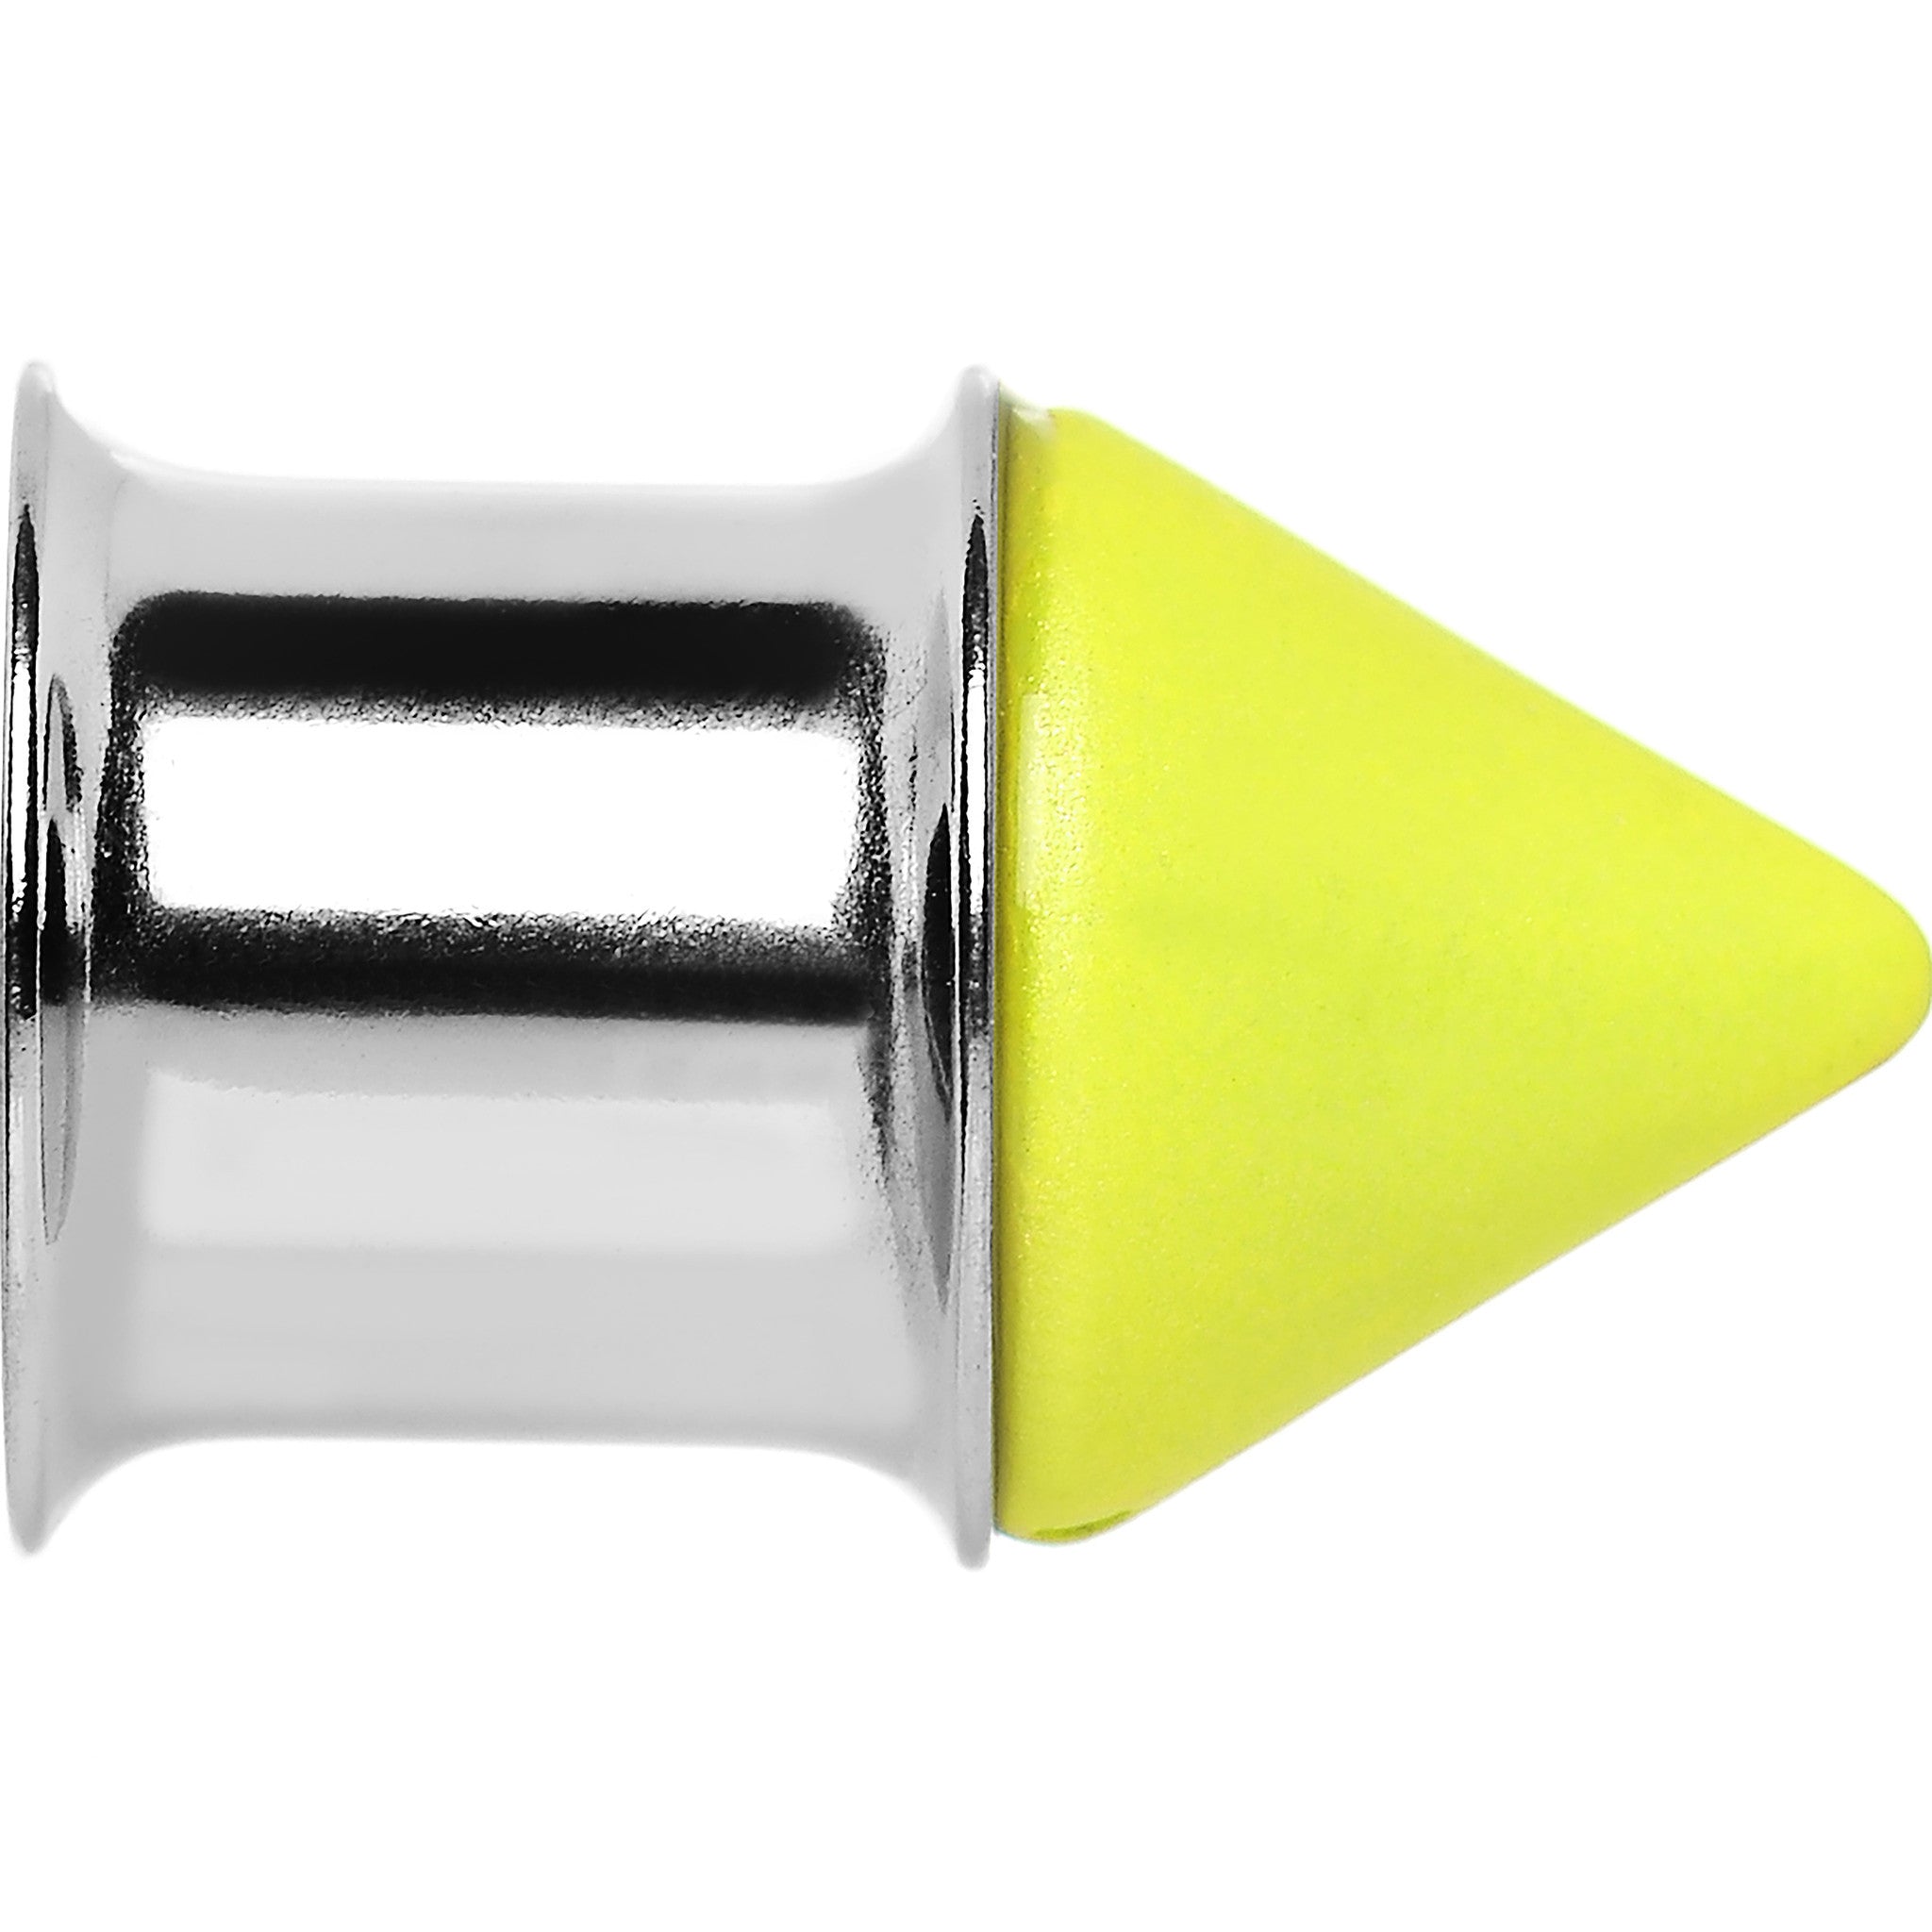 00 Gauge Yellow Neon Cone Stainless Steel Plug